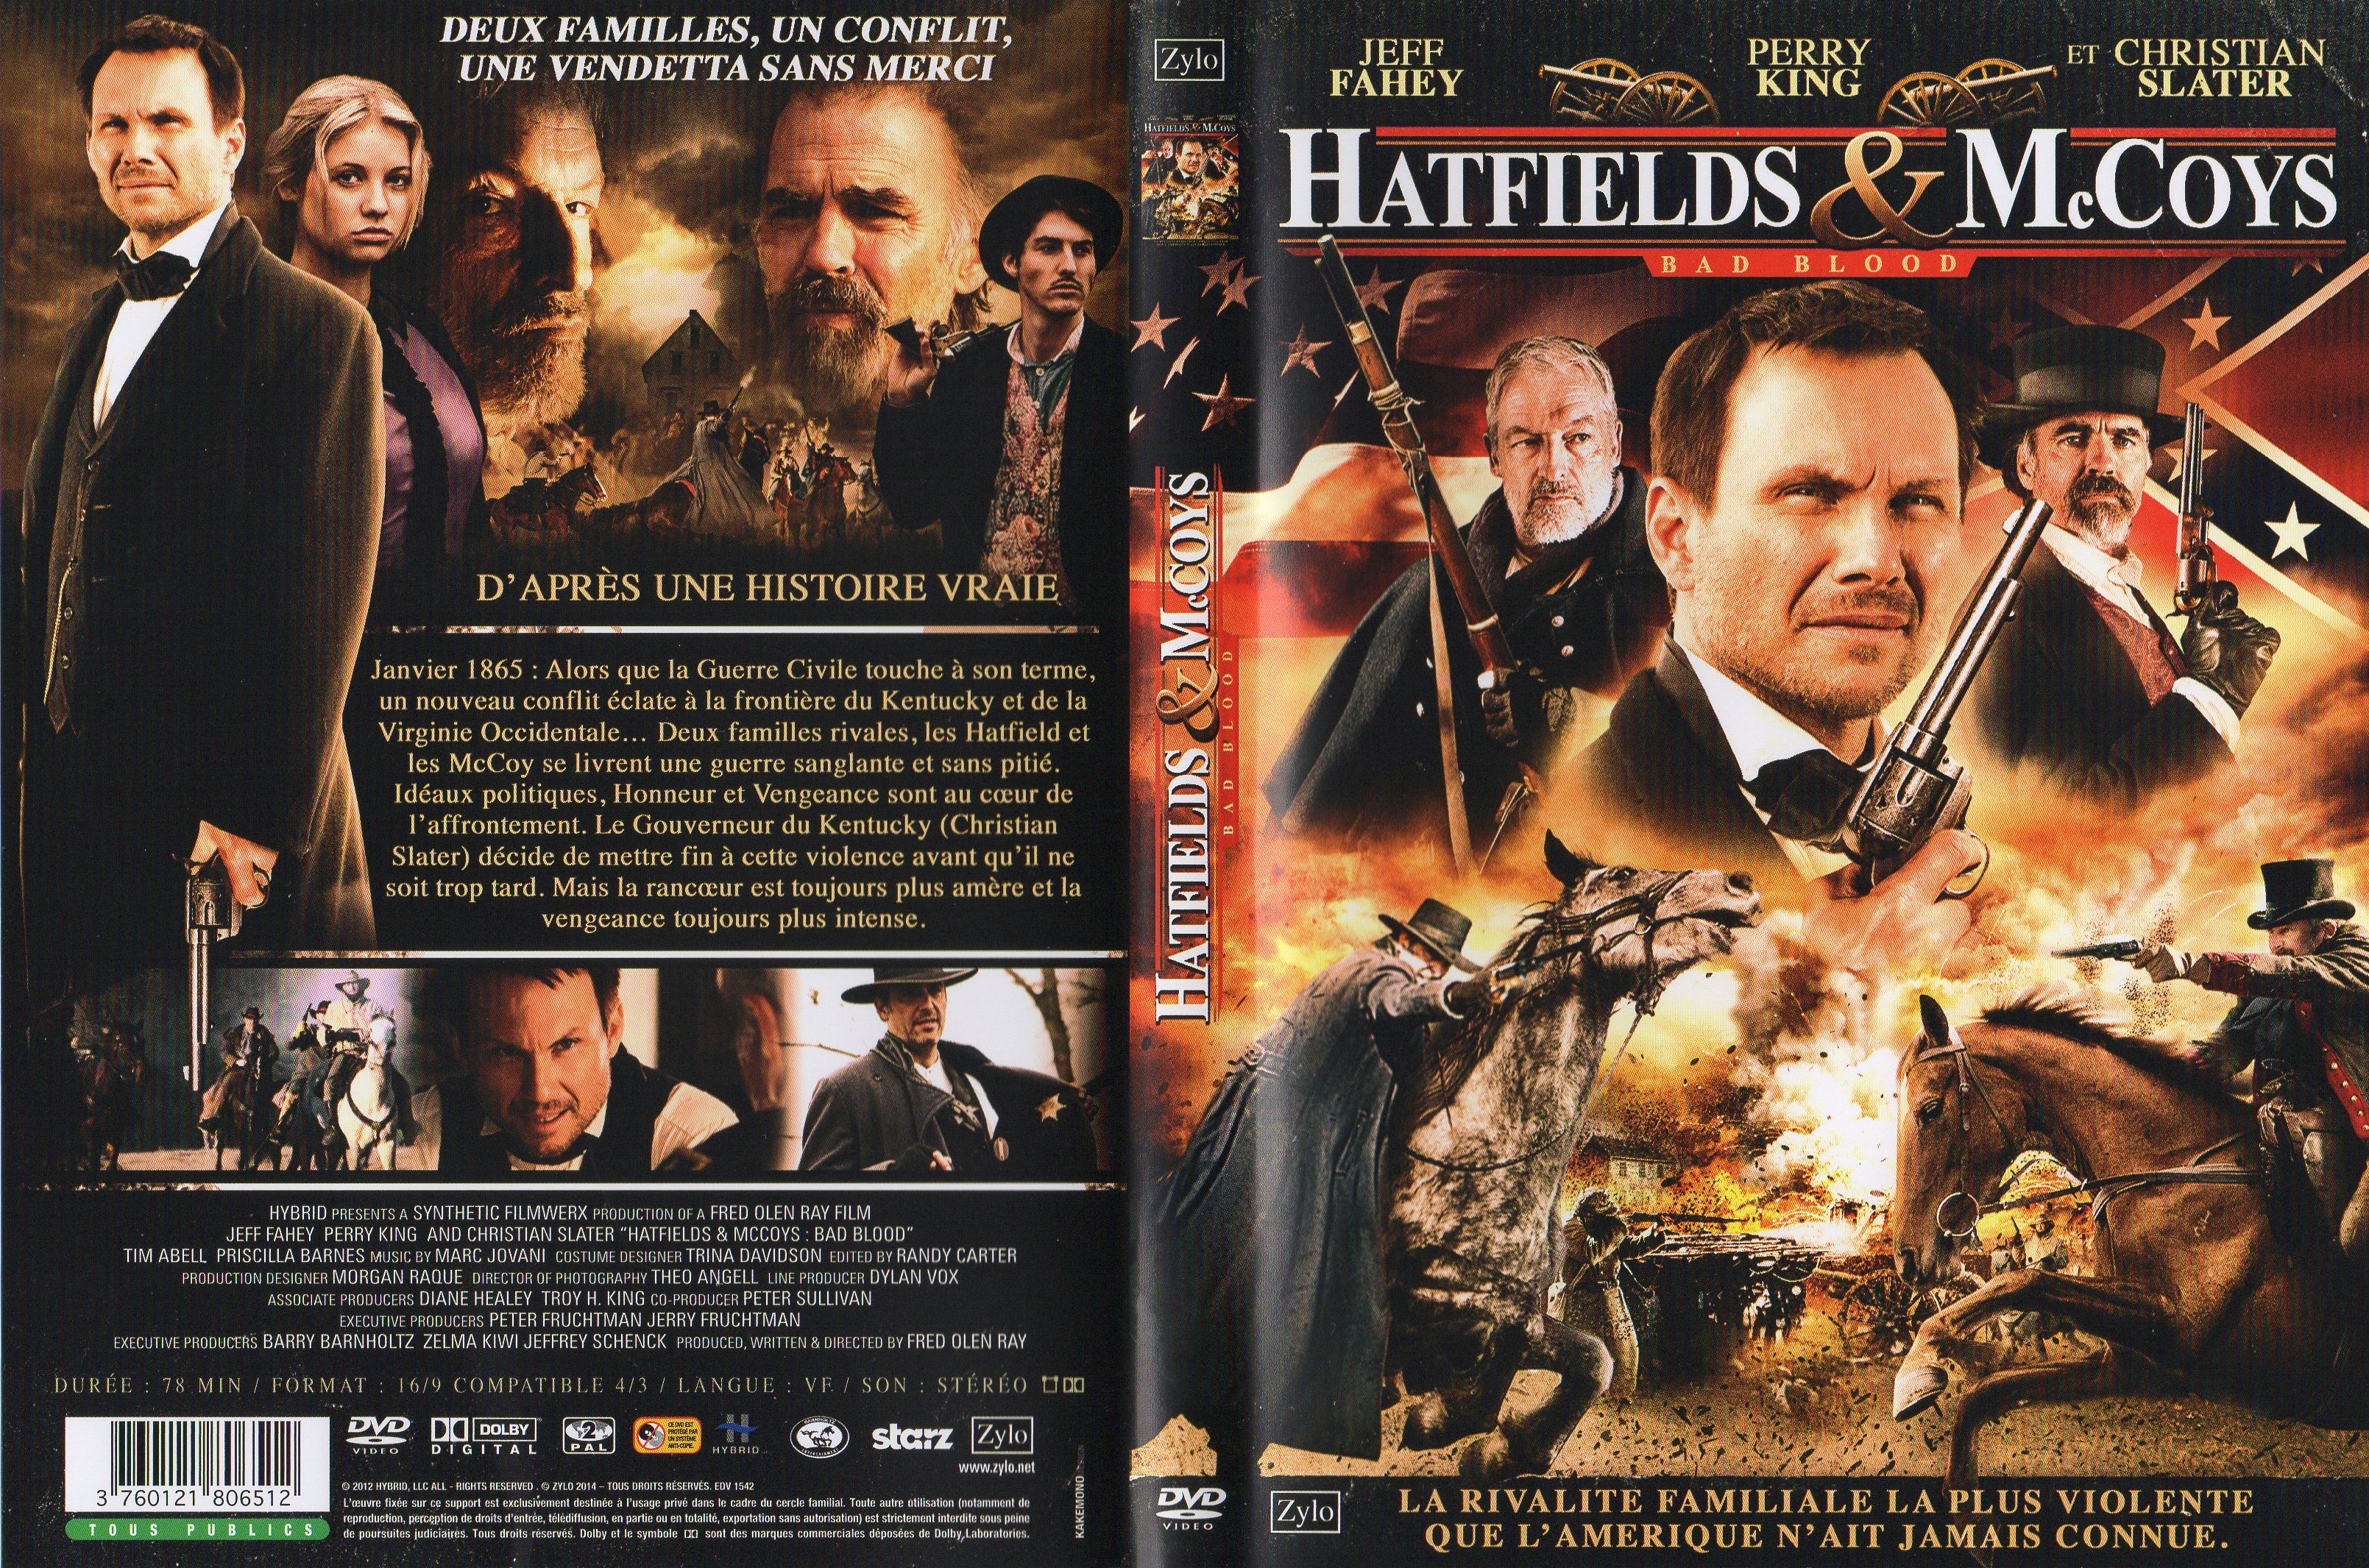 Jaquette DVD Hatfields & McCoys - Bad blood